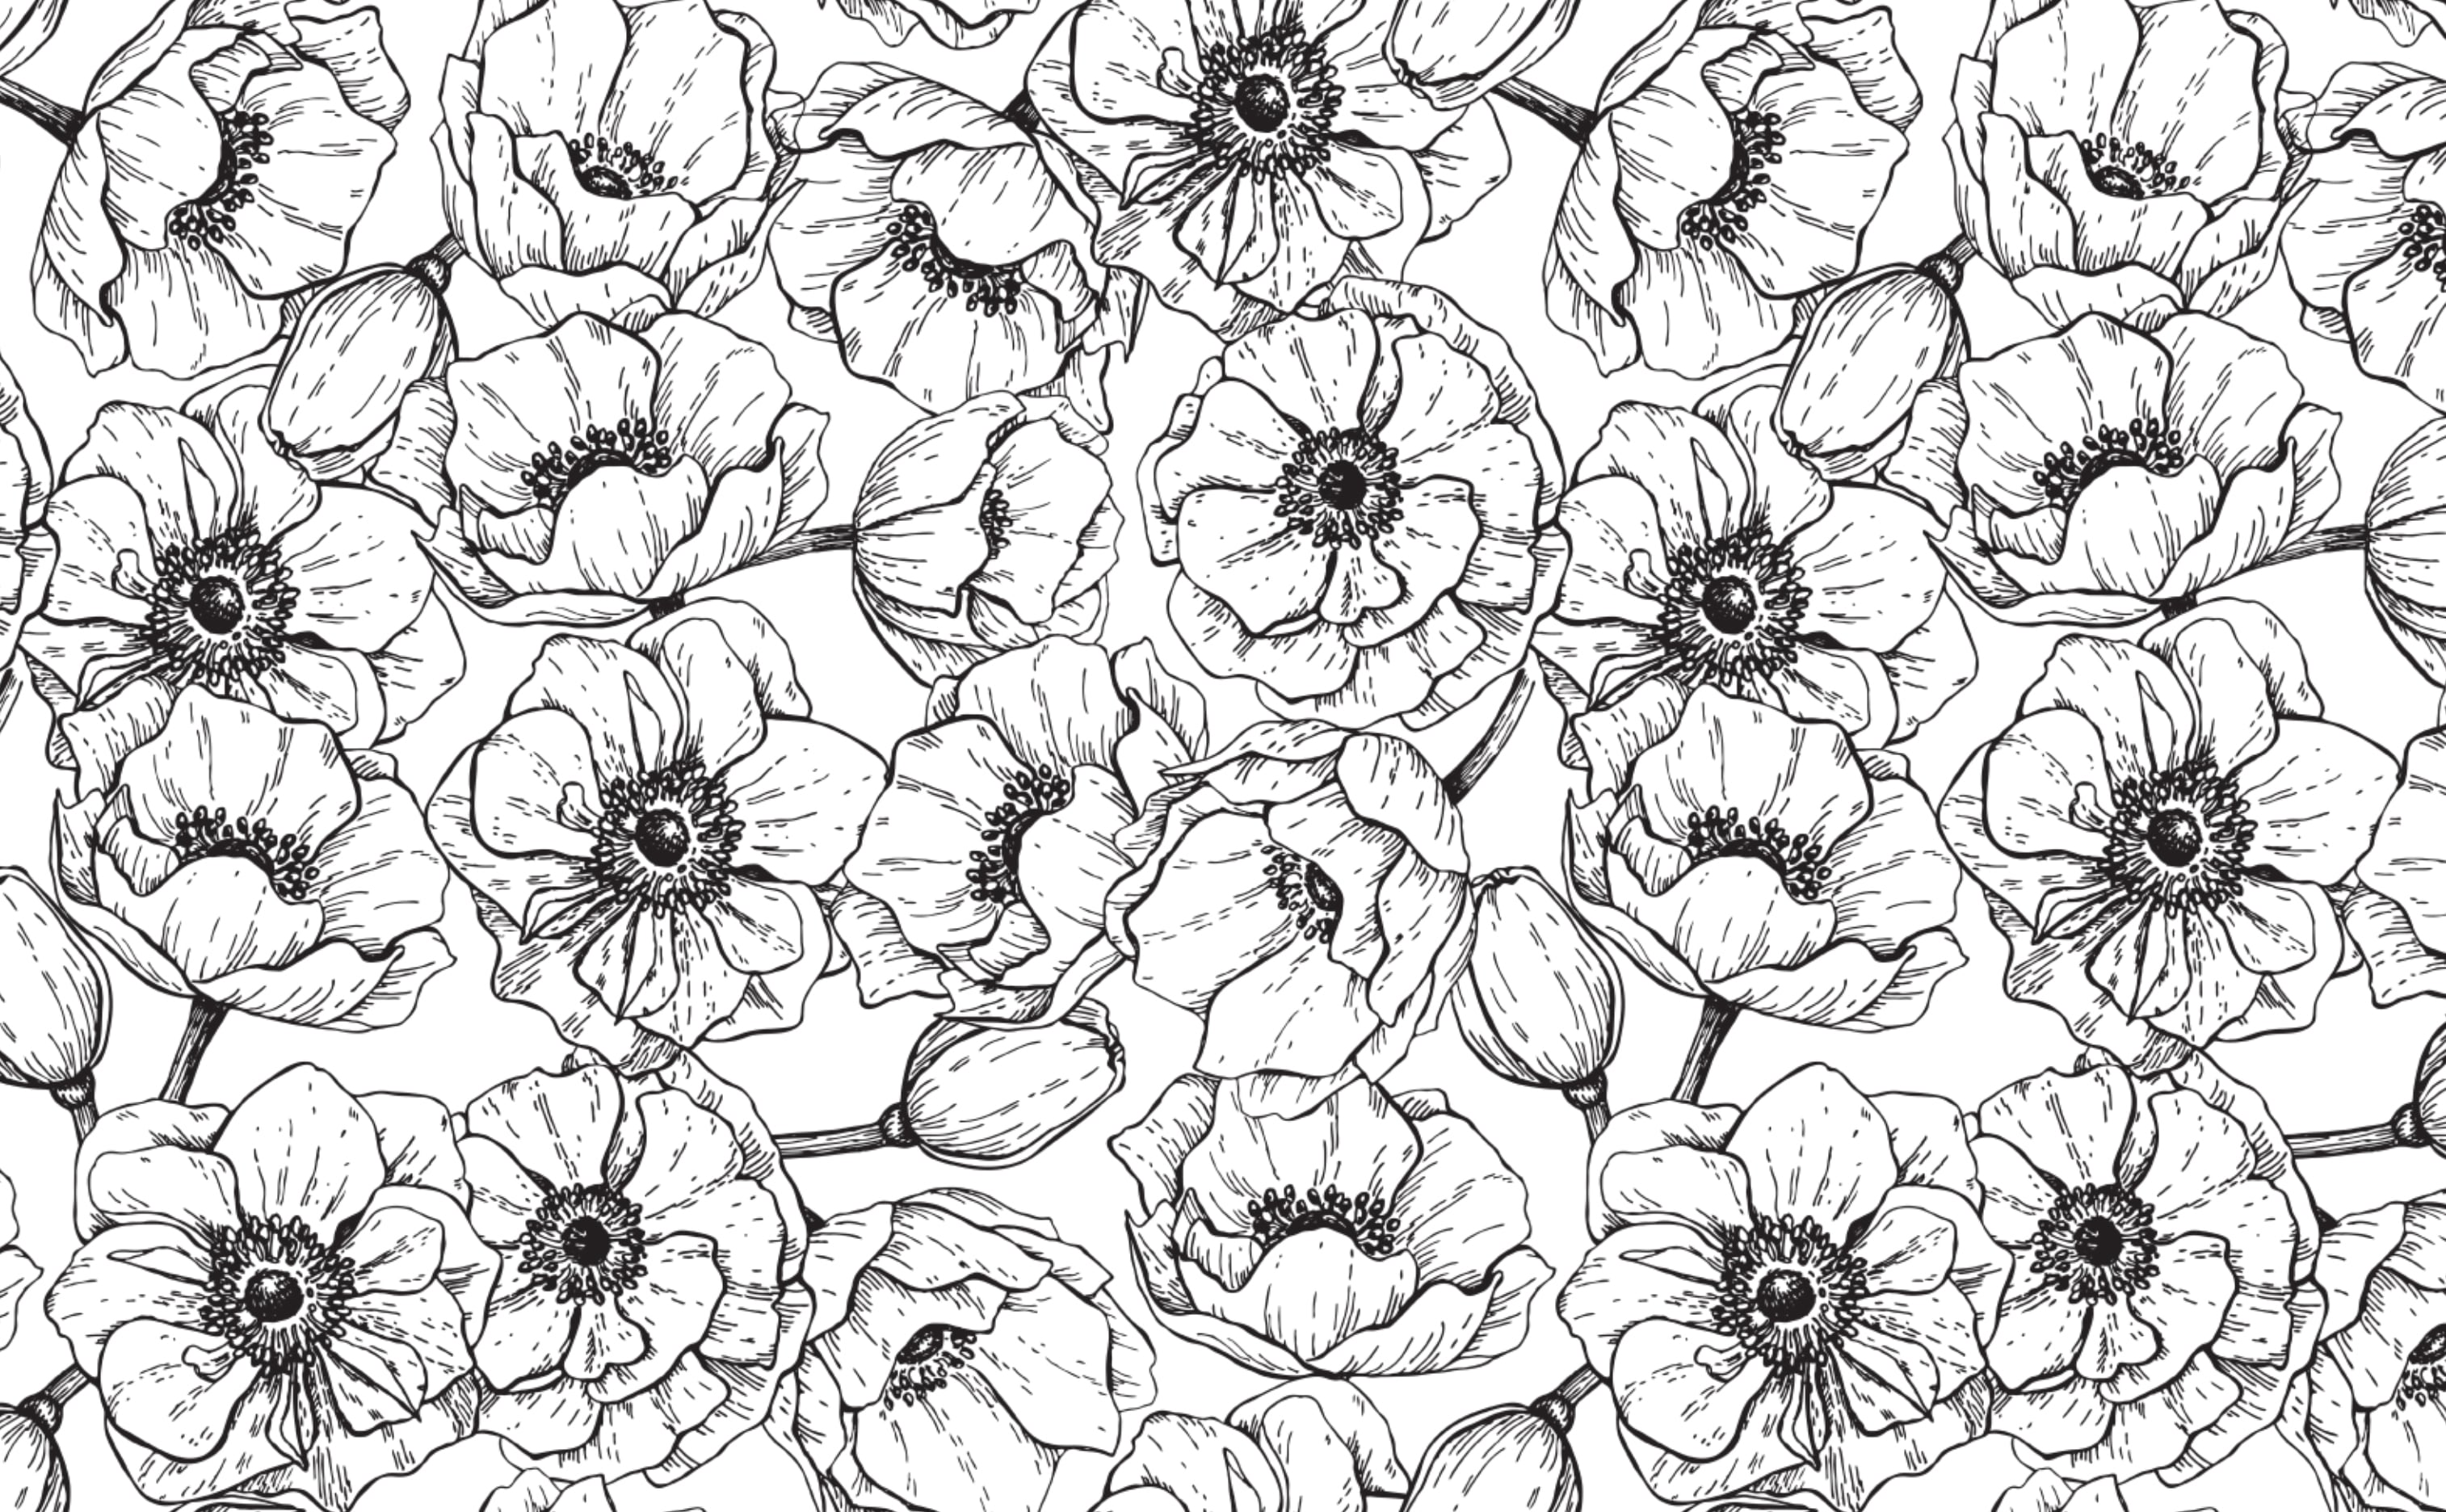 Dutch Floral 01 Wallpaper by Jan Davidsz. de Heem – Woodchip & Magnolia